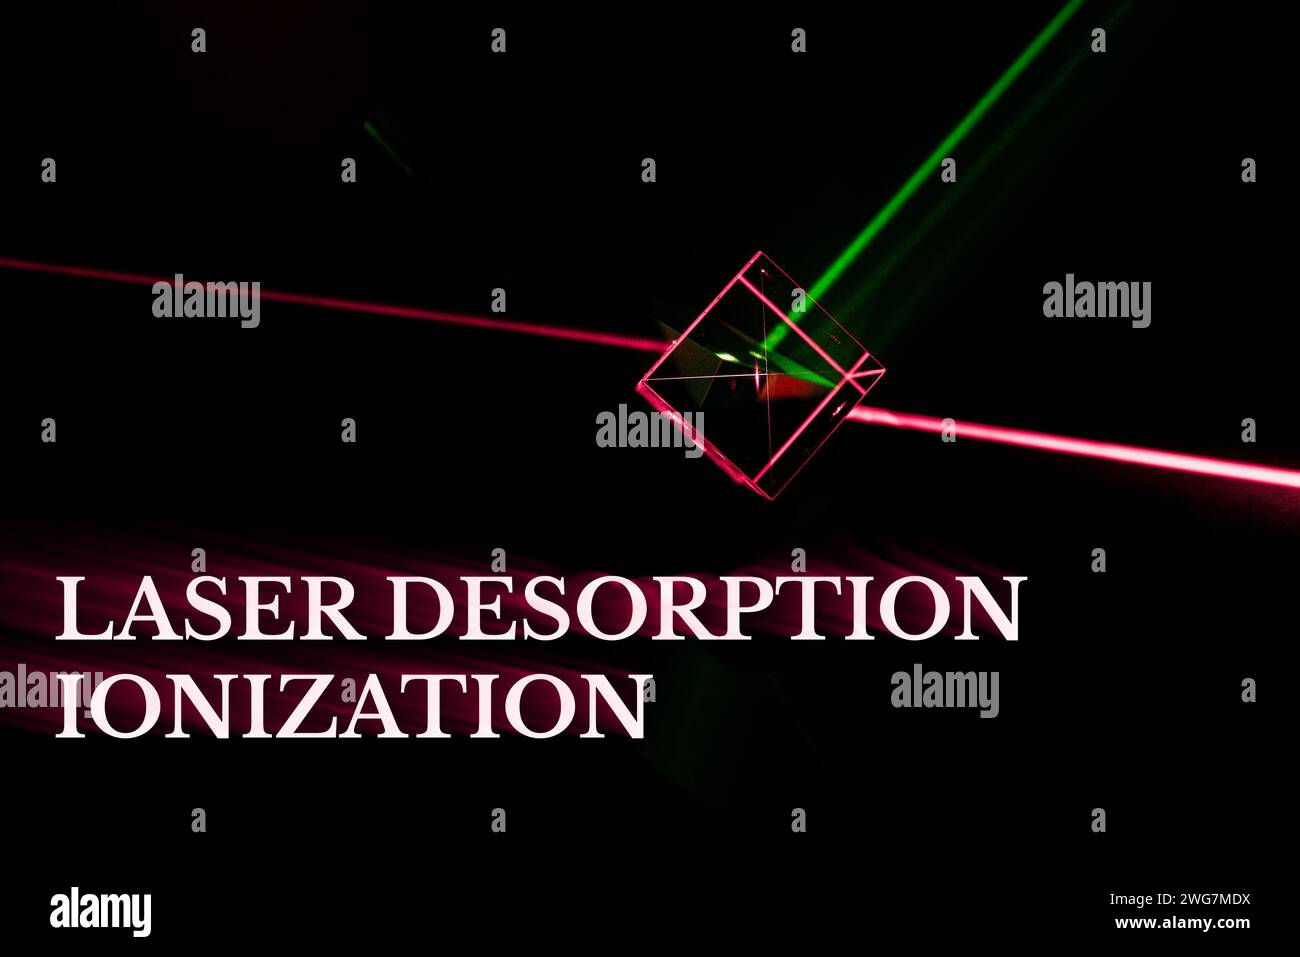 Laser Desorption Ionization: Analyzes molecules in mass spectrometry. Stock Photo